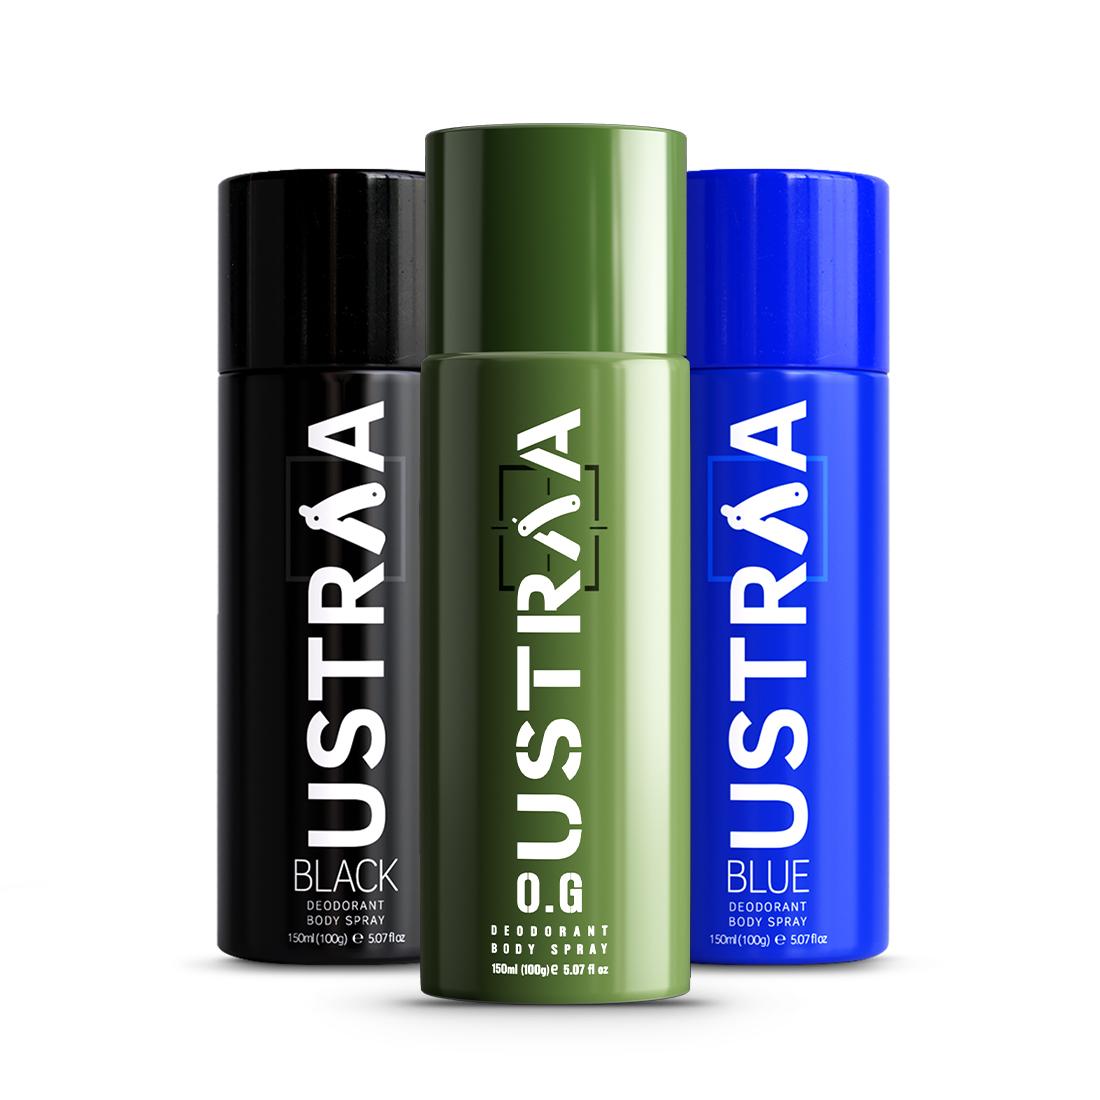 Deodorant Body Spray - 150 ml - OG, Black &  Blue - Set of 3